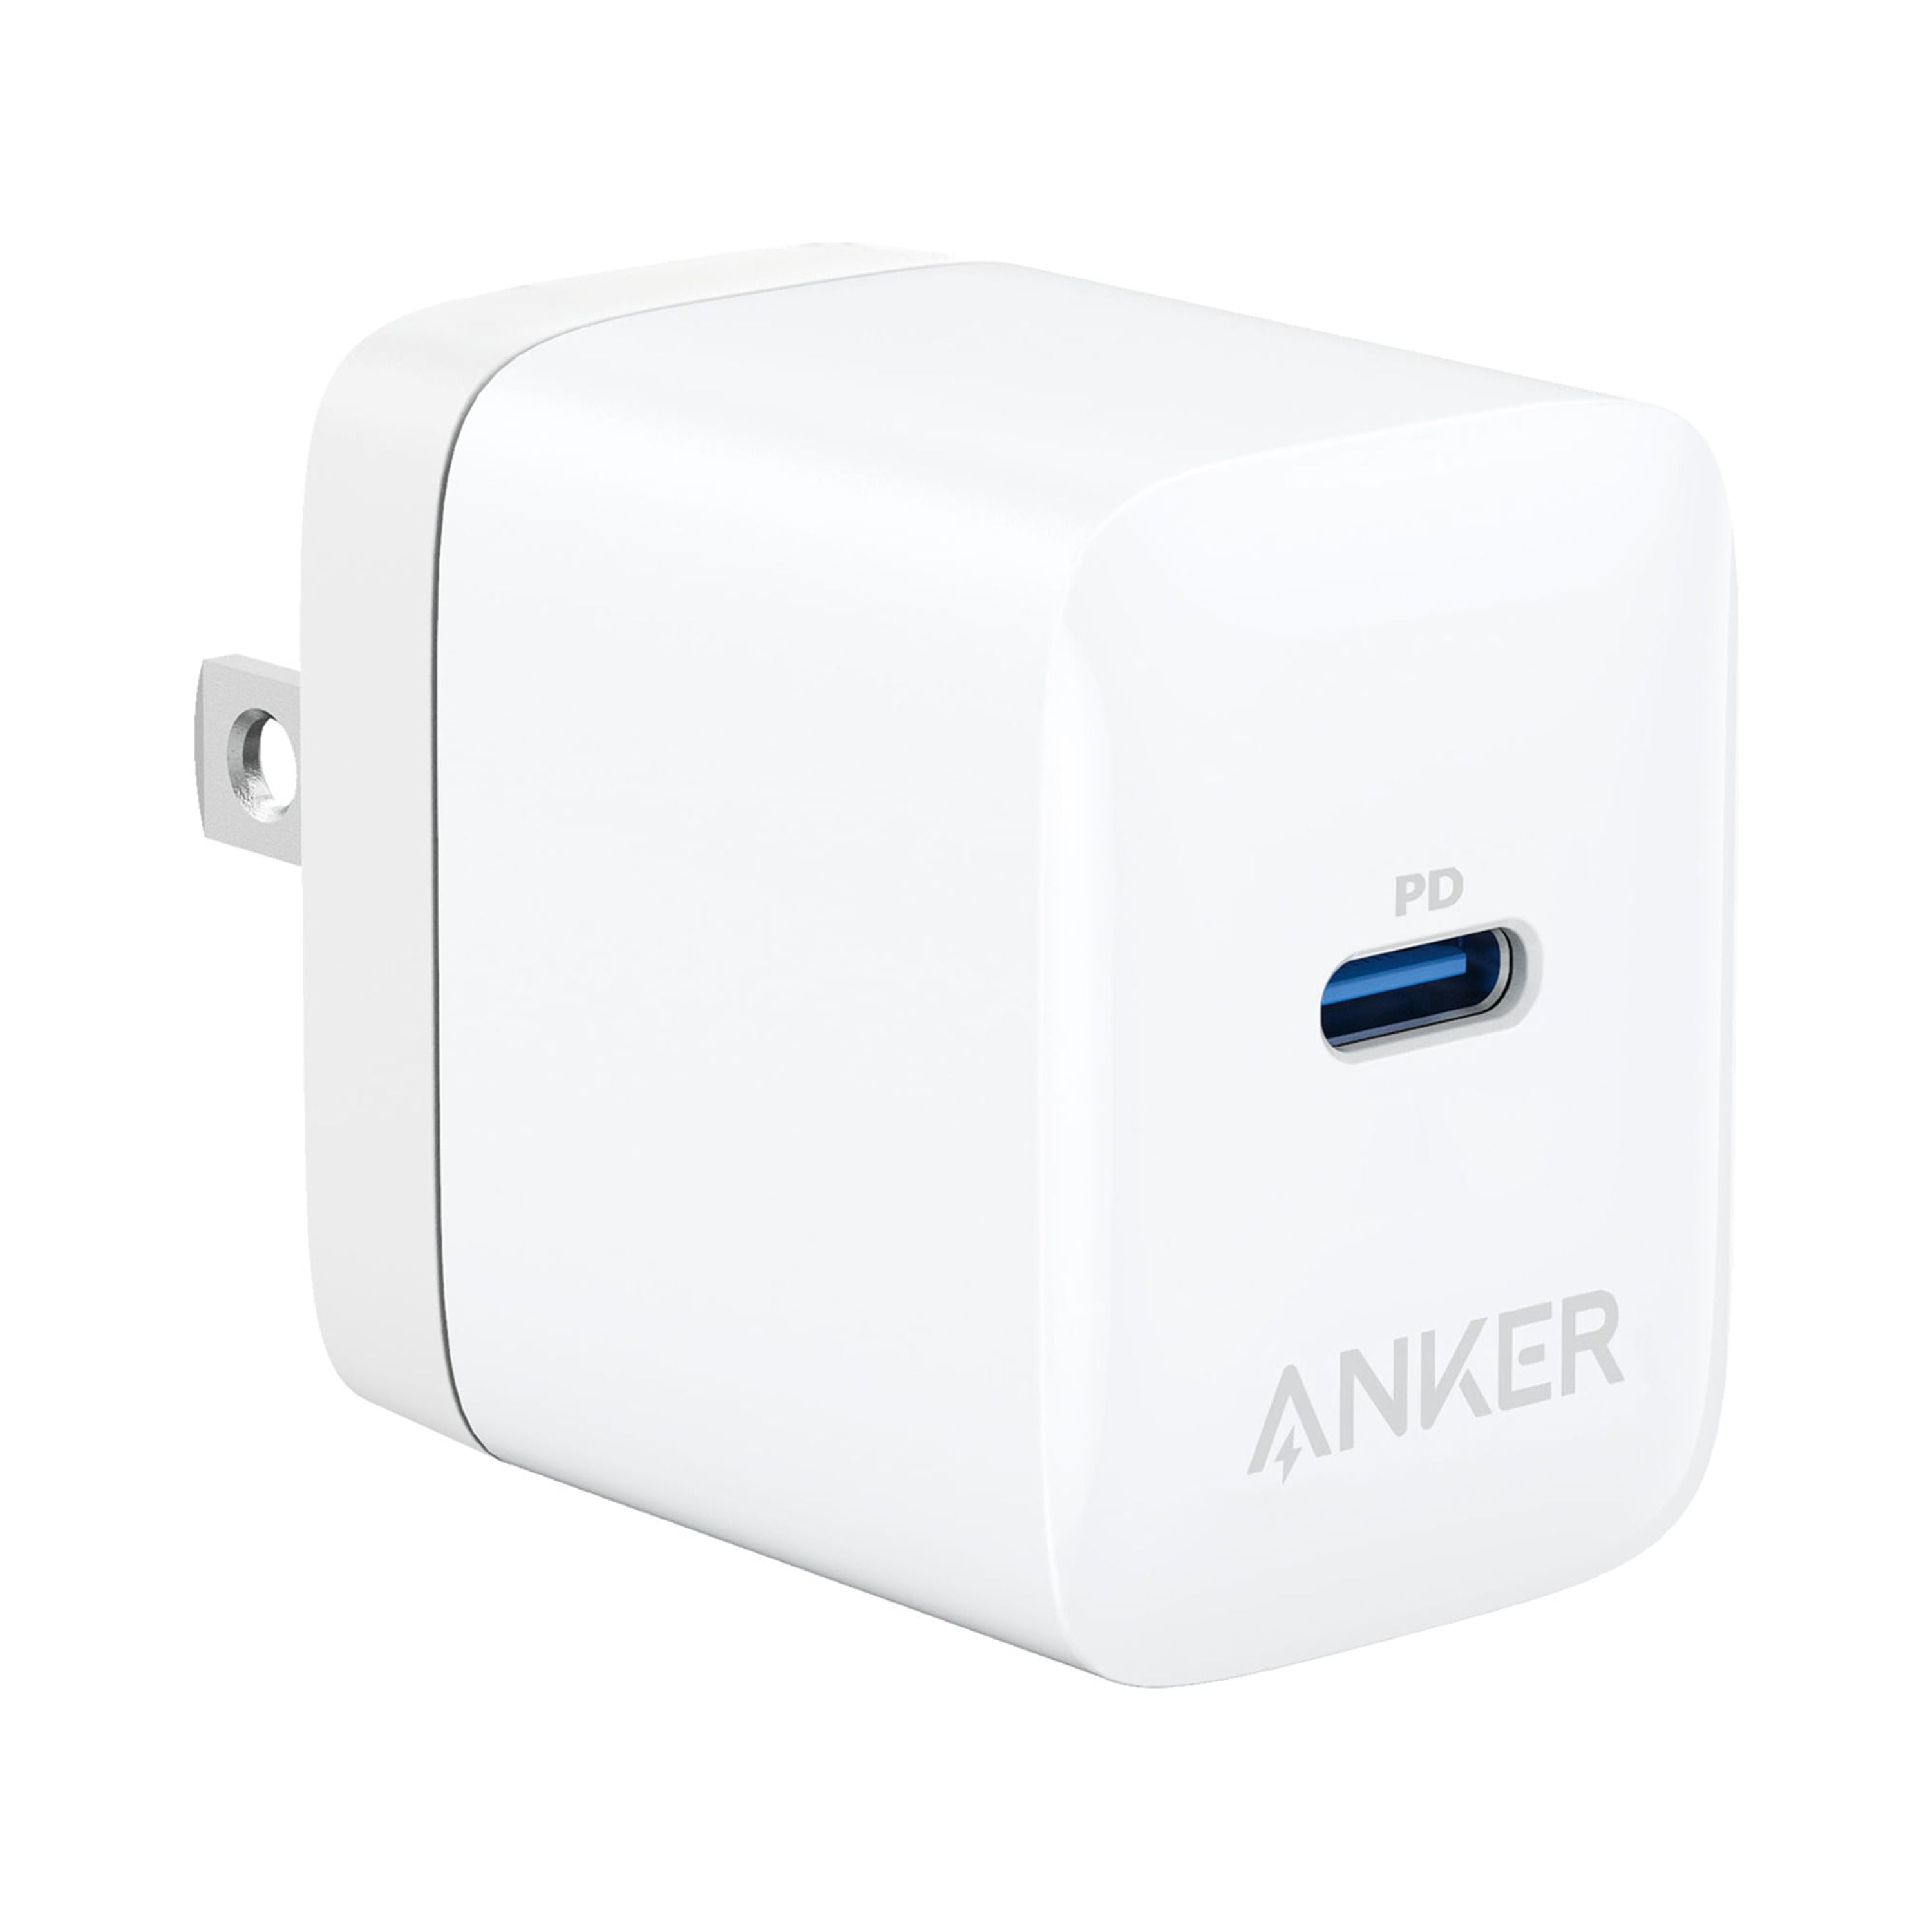 Anker 521 Charger (Nano Pro) - White - Micro Center